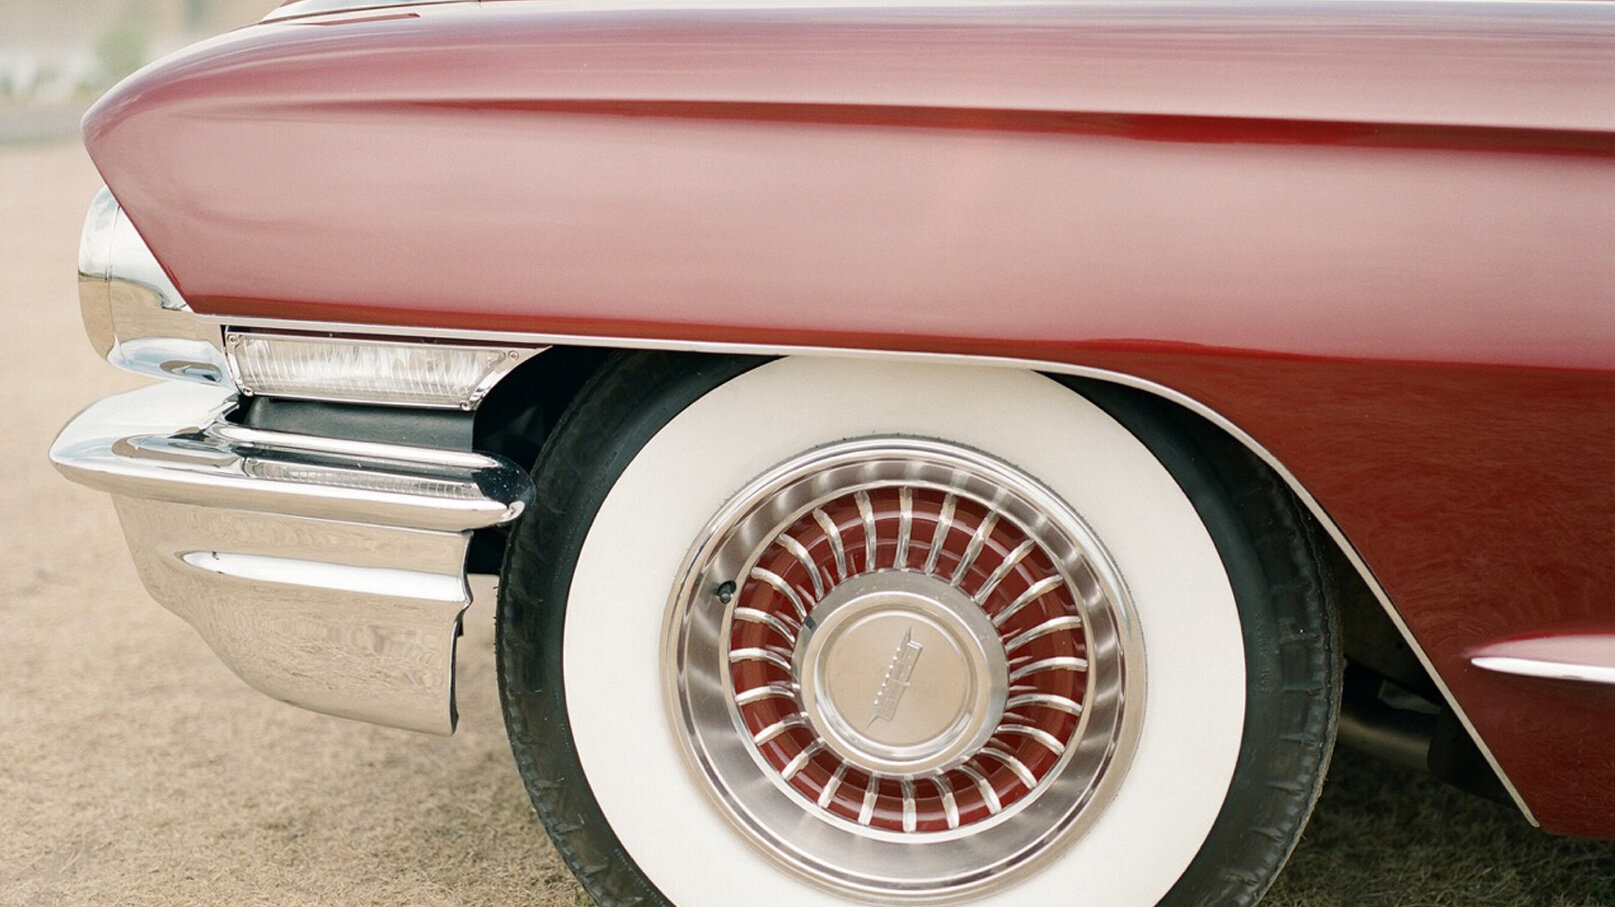 1962 Cadillac Homepage Image 02